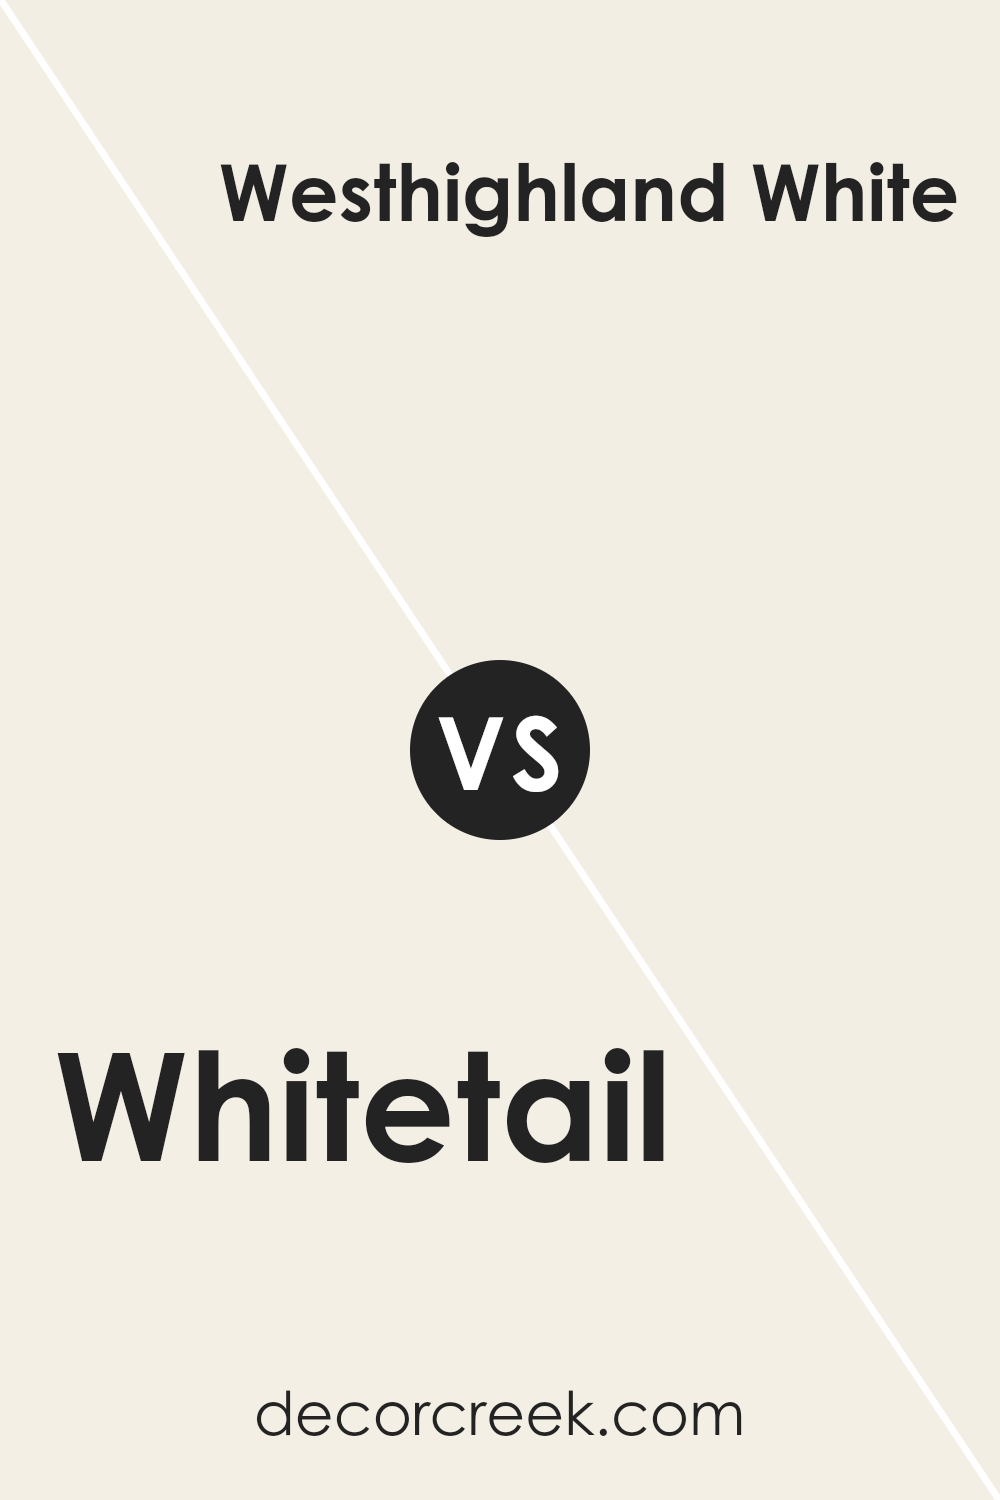 whitetail_sw_7103_vs_westhighland_white_sw_7566